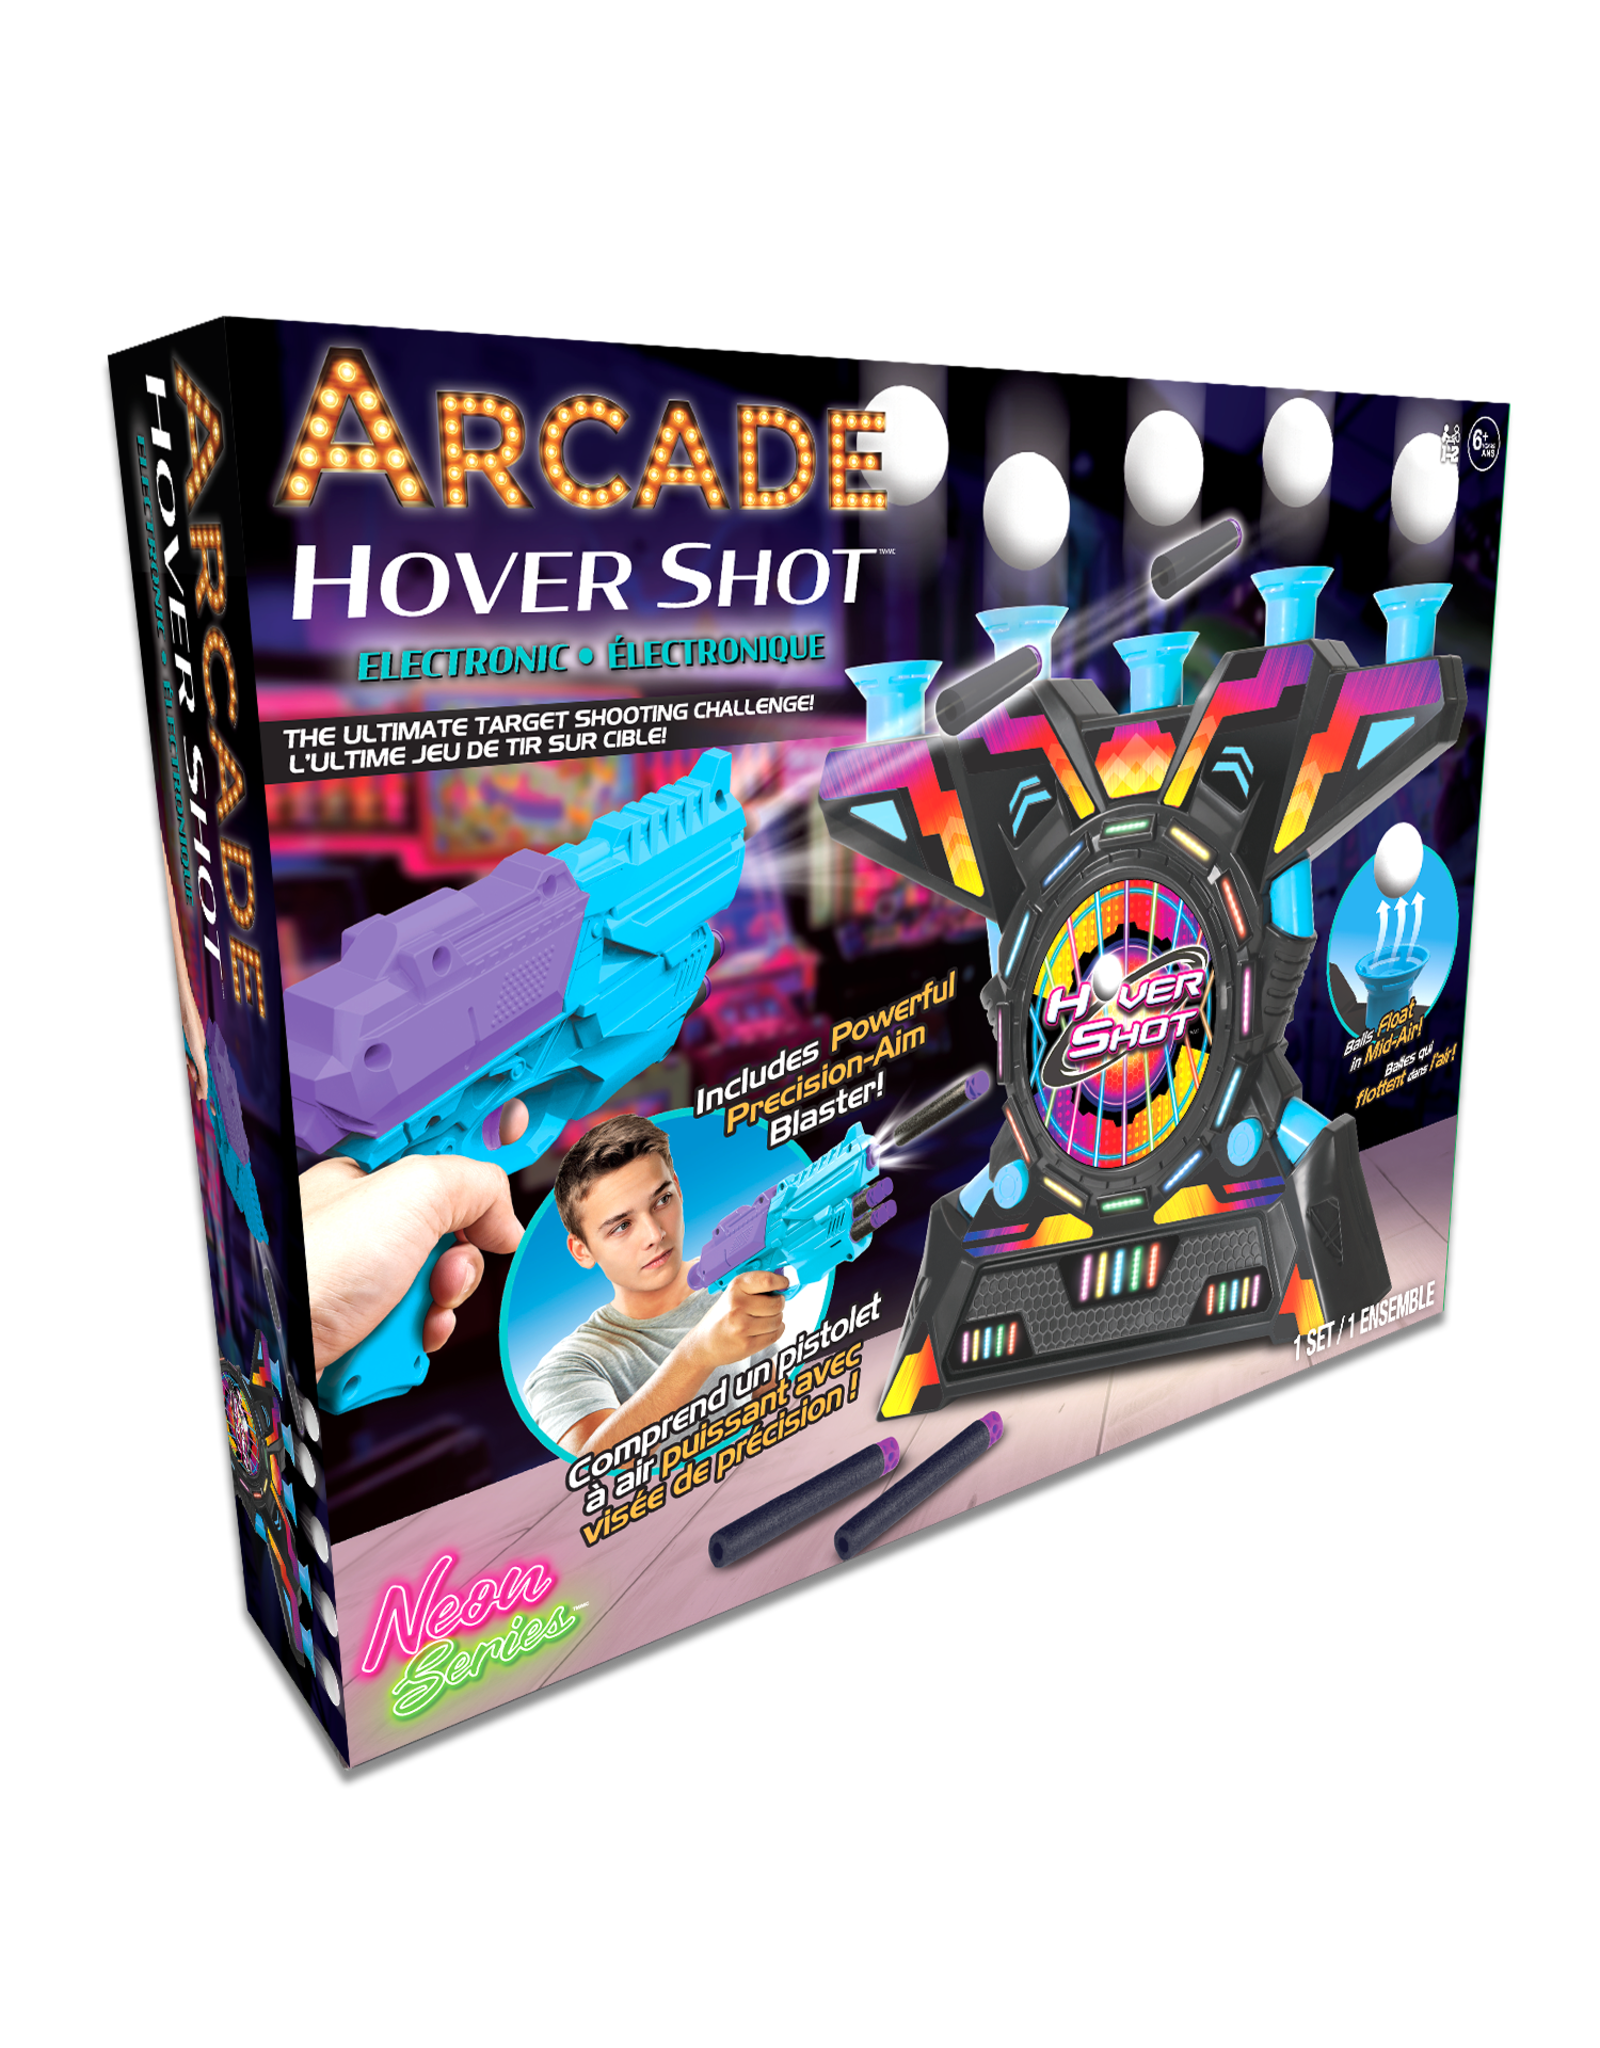 Ricochet Arcade - Hover shot electronic